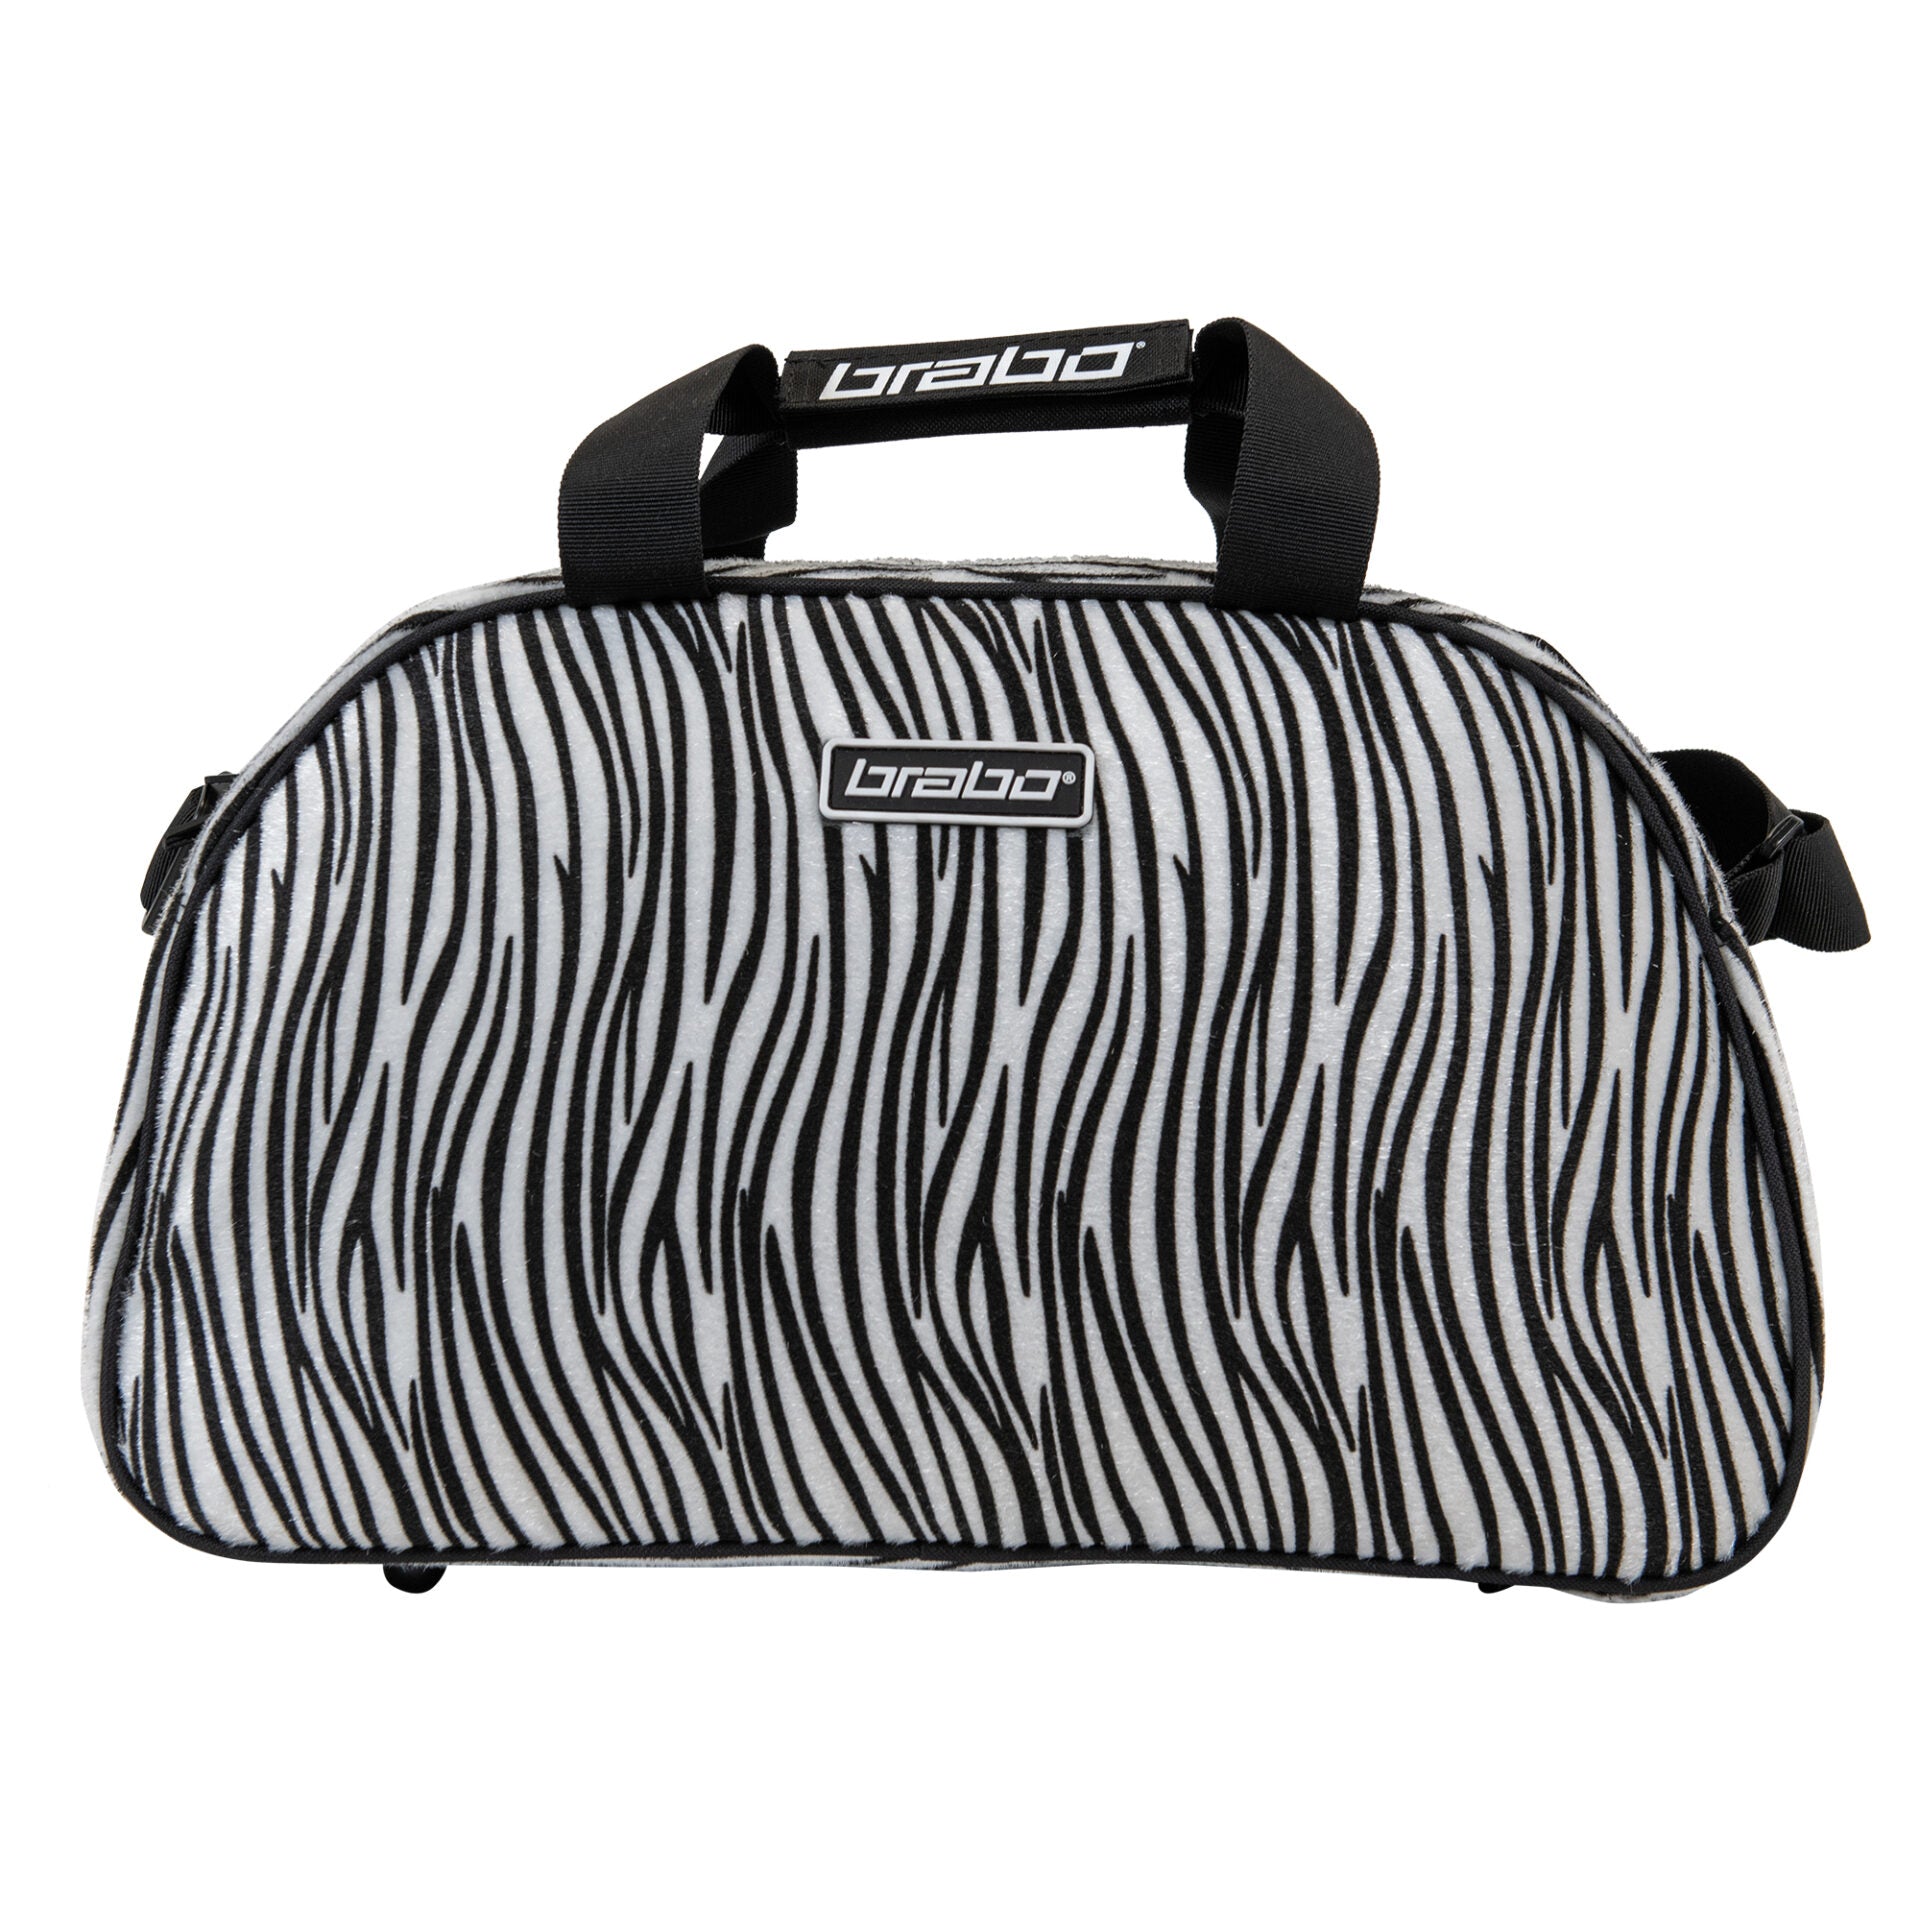 Brabo Zebra Duffle Bag 